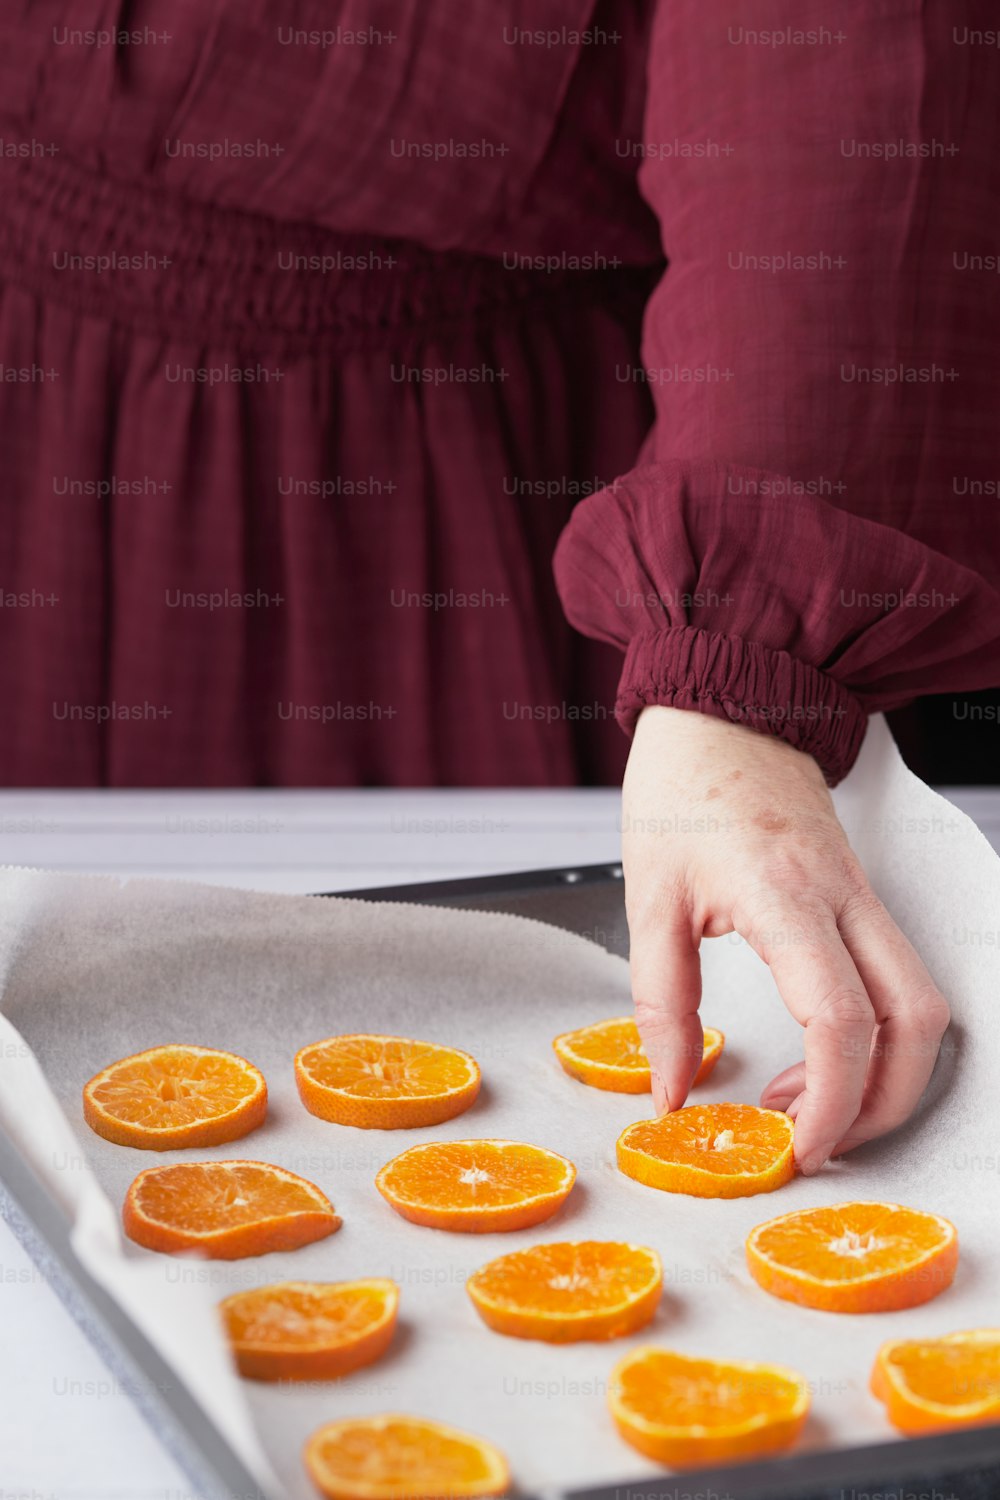 a person cutting oranges